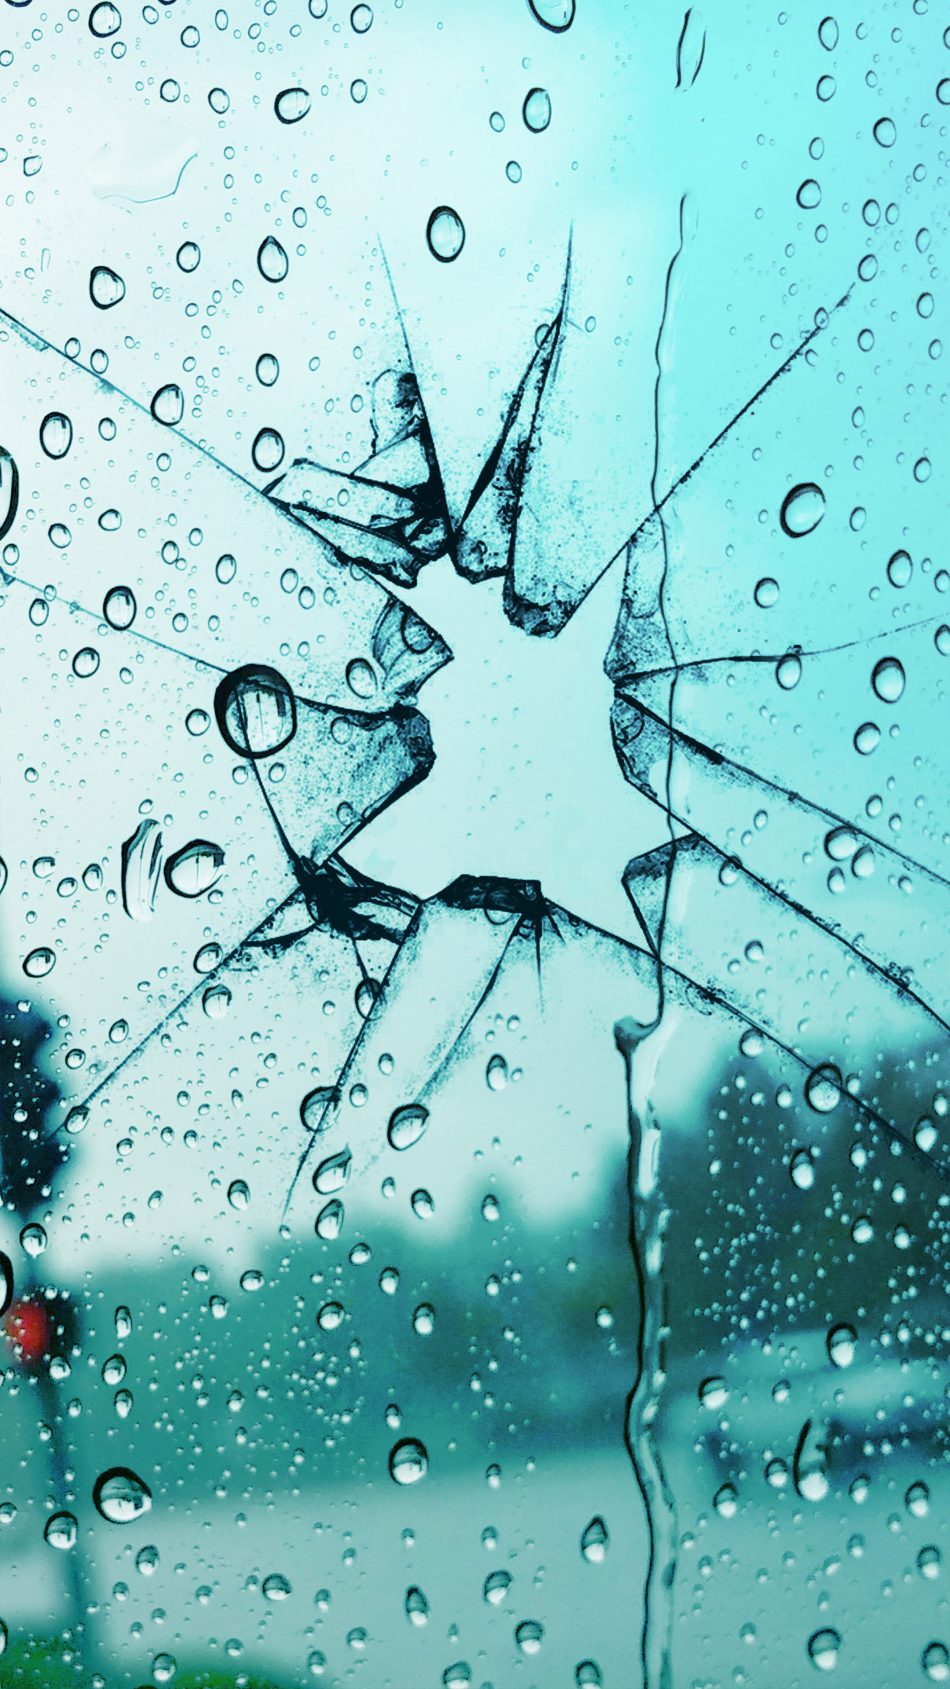 Broken Glass Rain Drops 4k Ultra Hd Mobile Wallpaper - Broken Glass Wallpaper 2019 , HD Wallpaper & Backgrounds